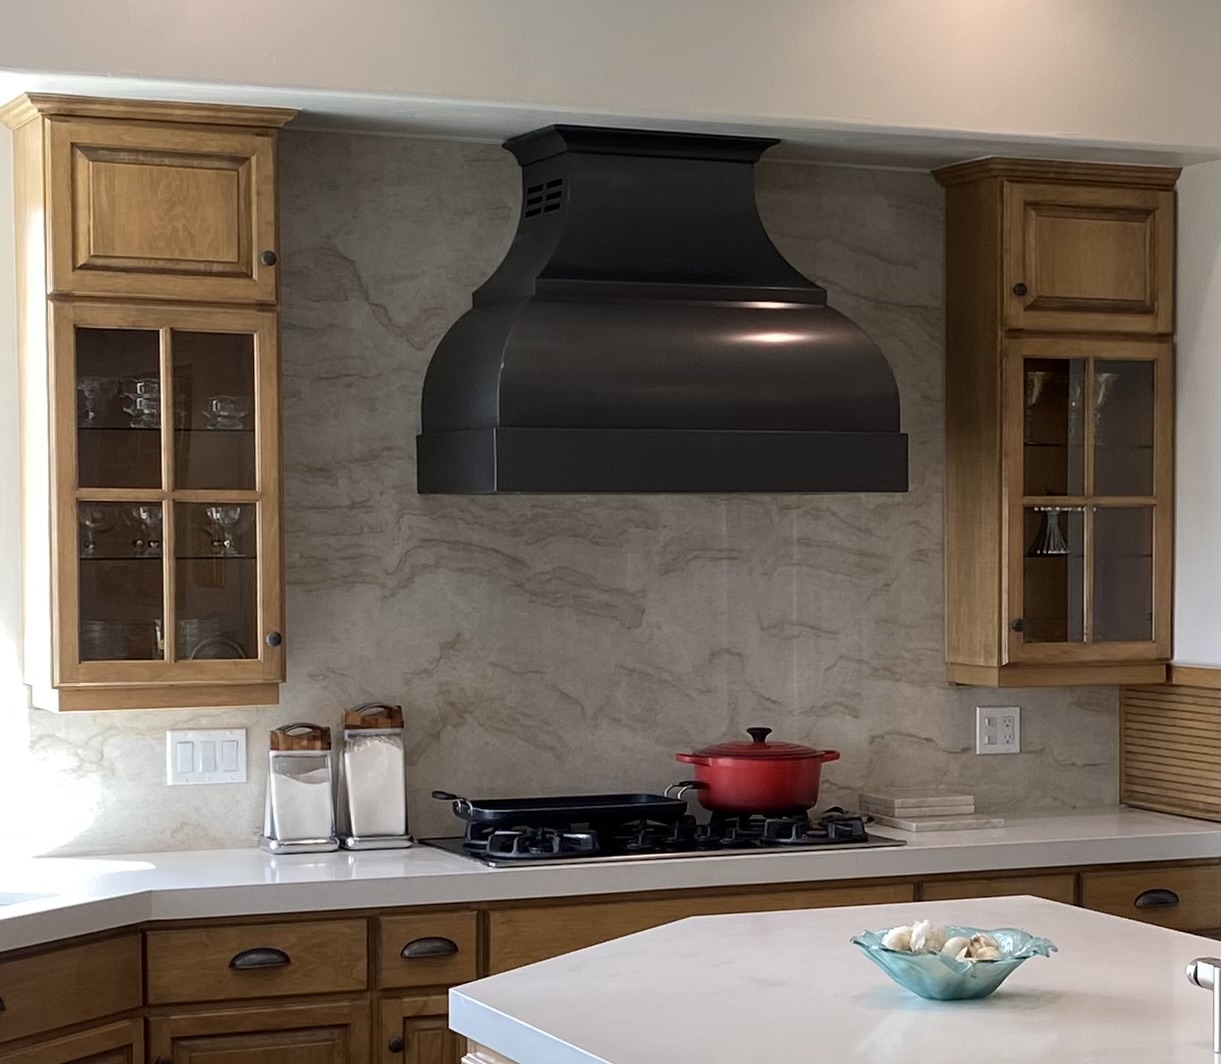 Craftsman kitchen concepts, rich brown kitchen cabinets and white kitchen countertops, marble backsplash